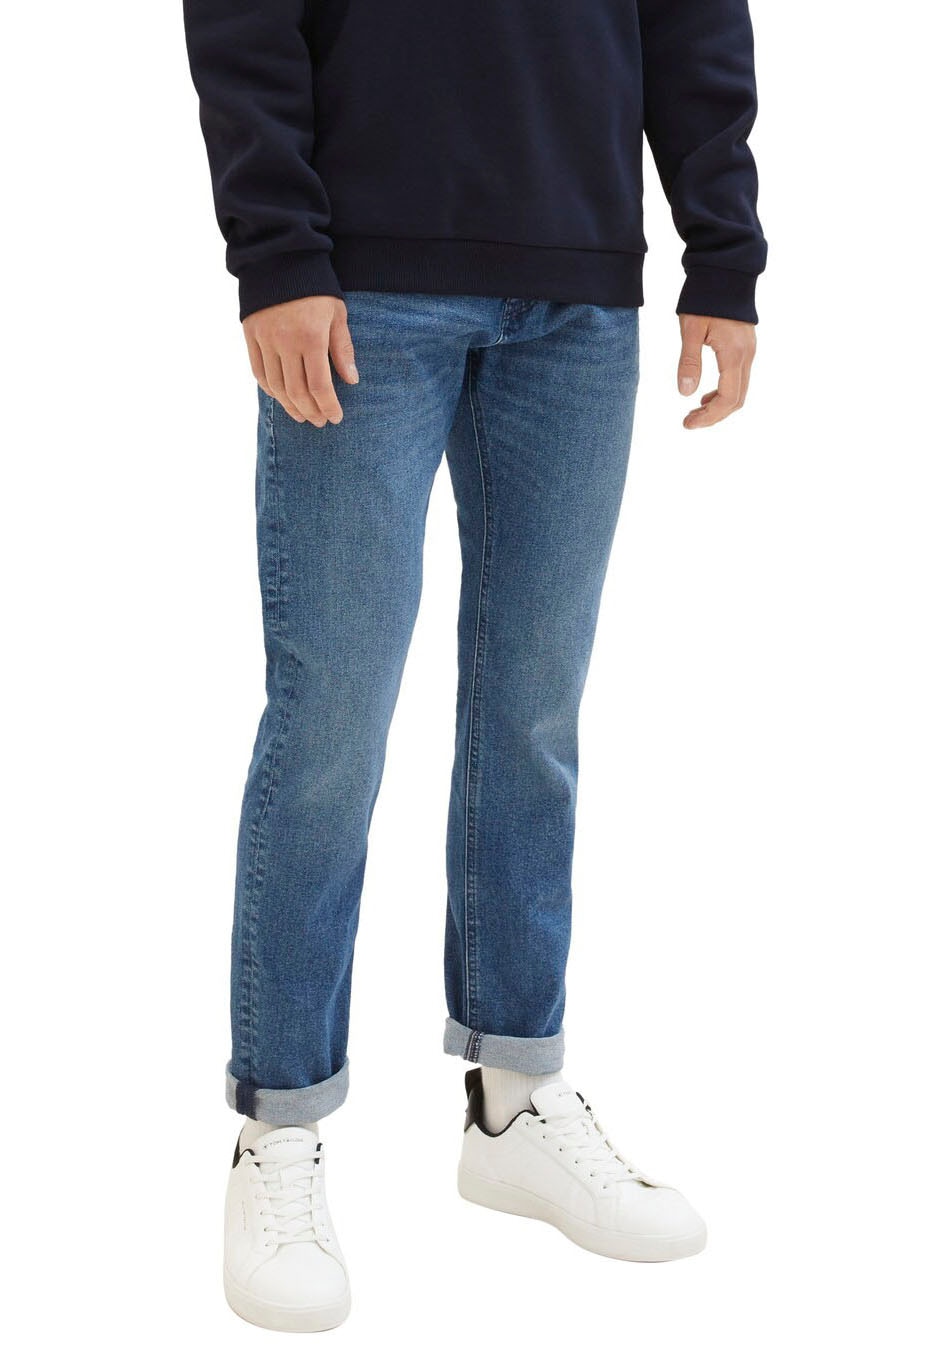 TOM TAILOR Denim Slim-fit-Jeans »Piers Slim« von Tom Tailor Denim